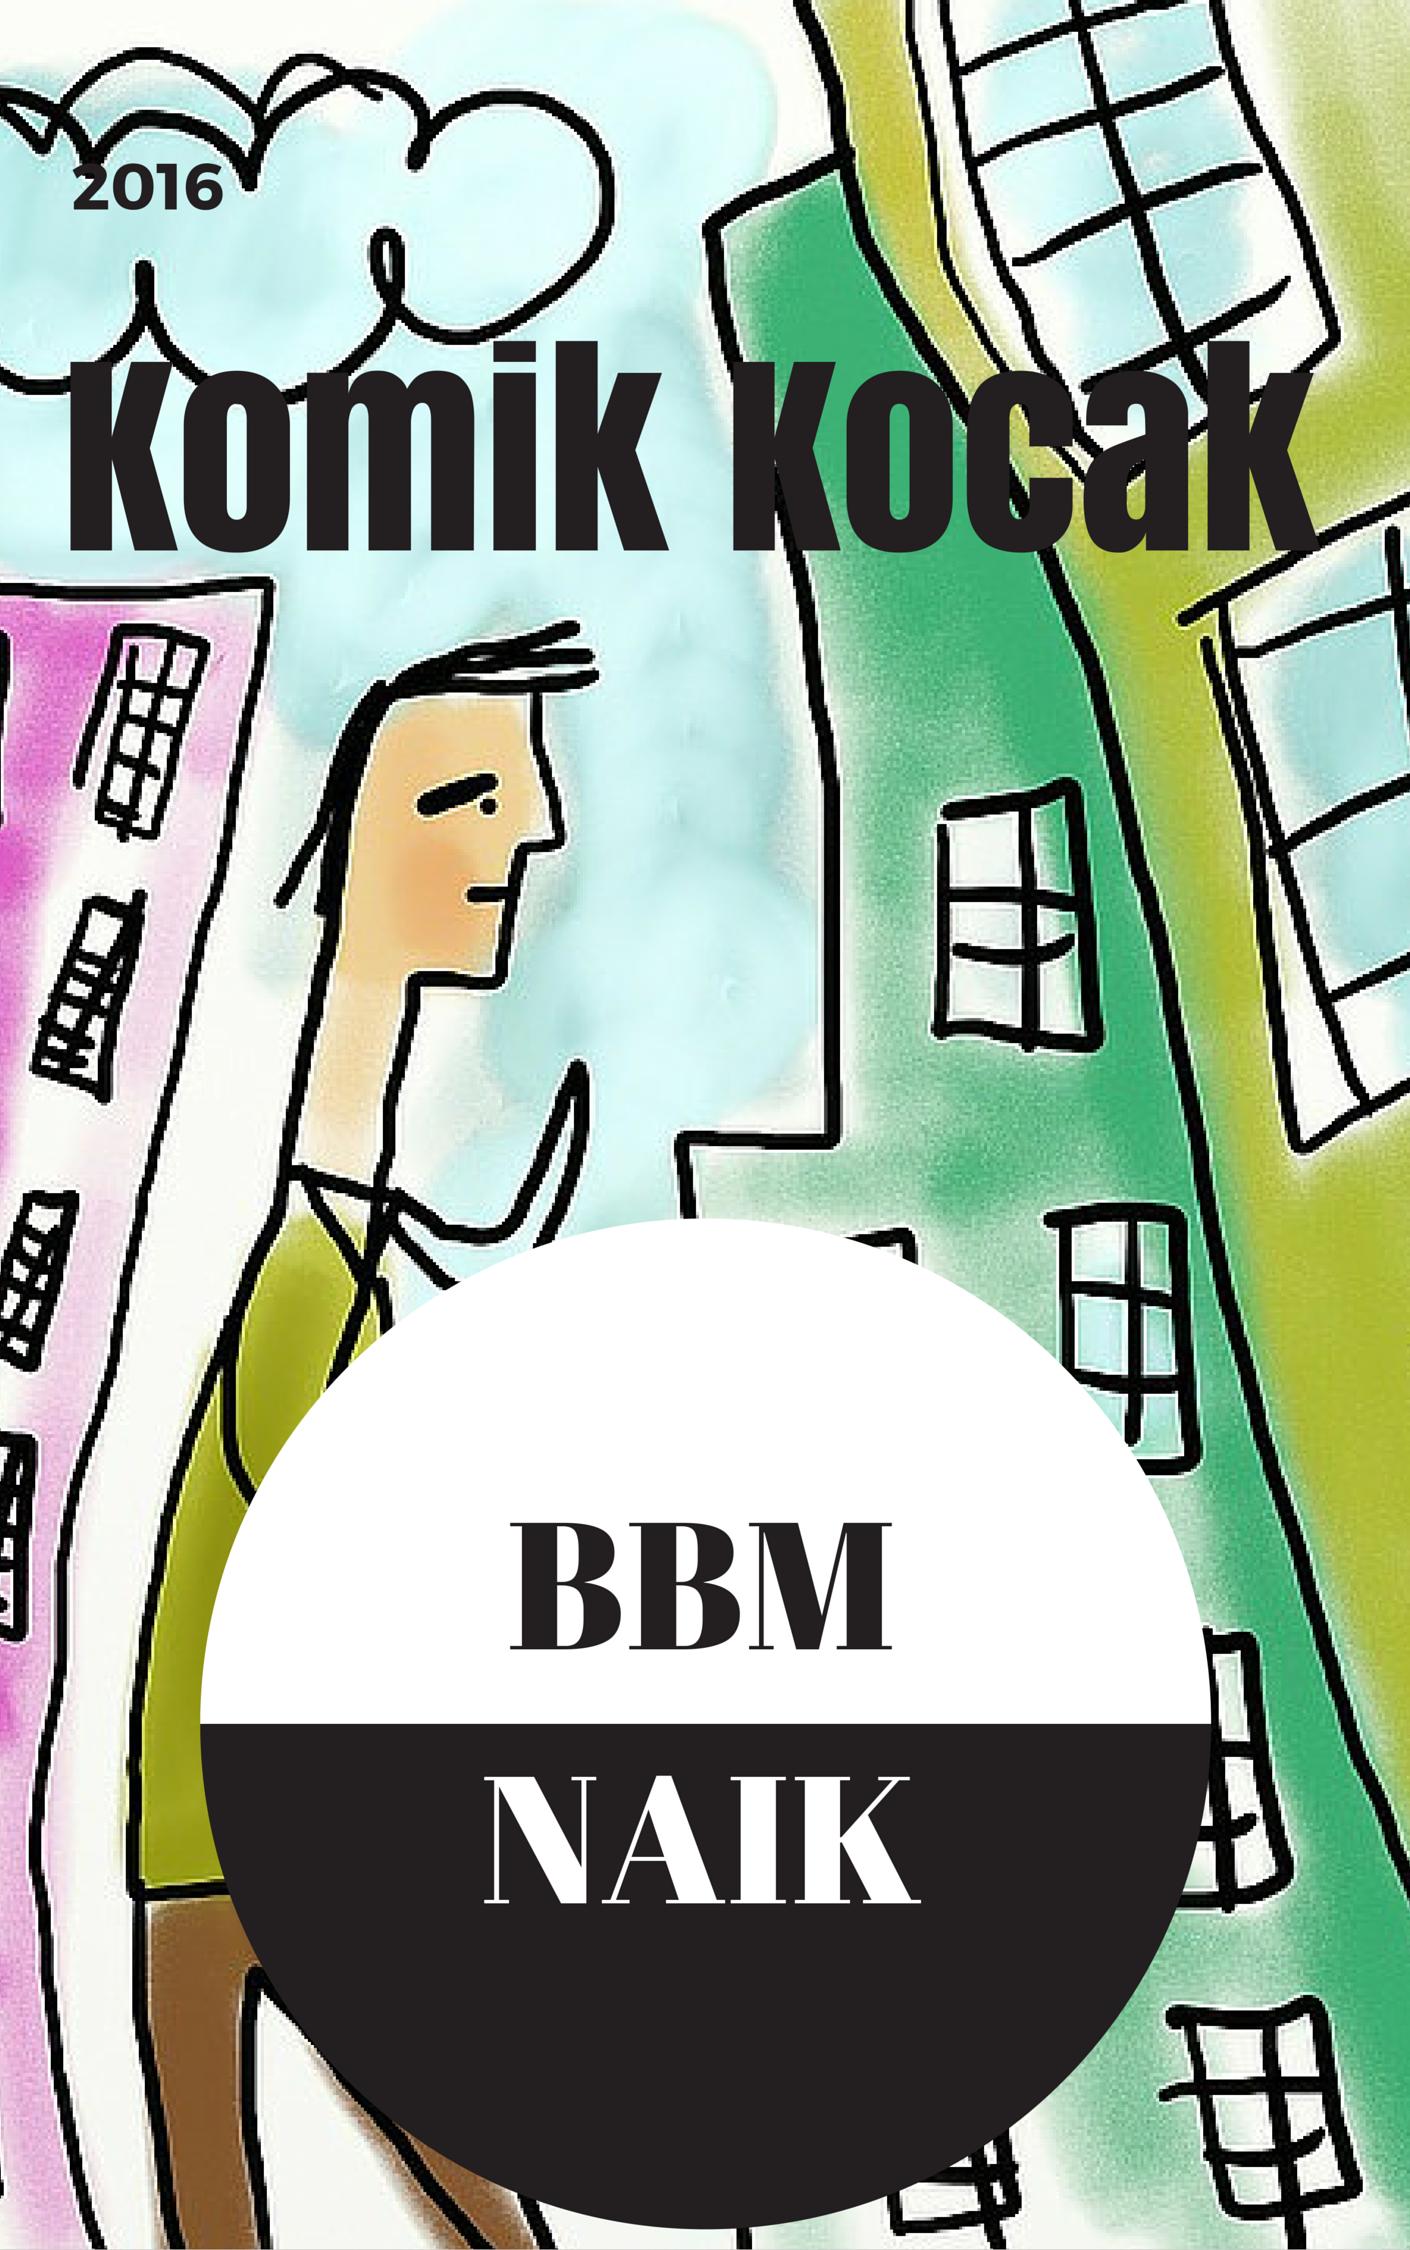 Komik Kocak 1 For Android APK Download